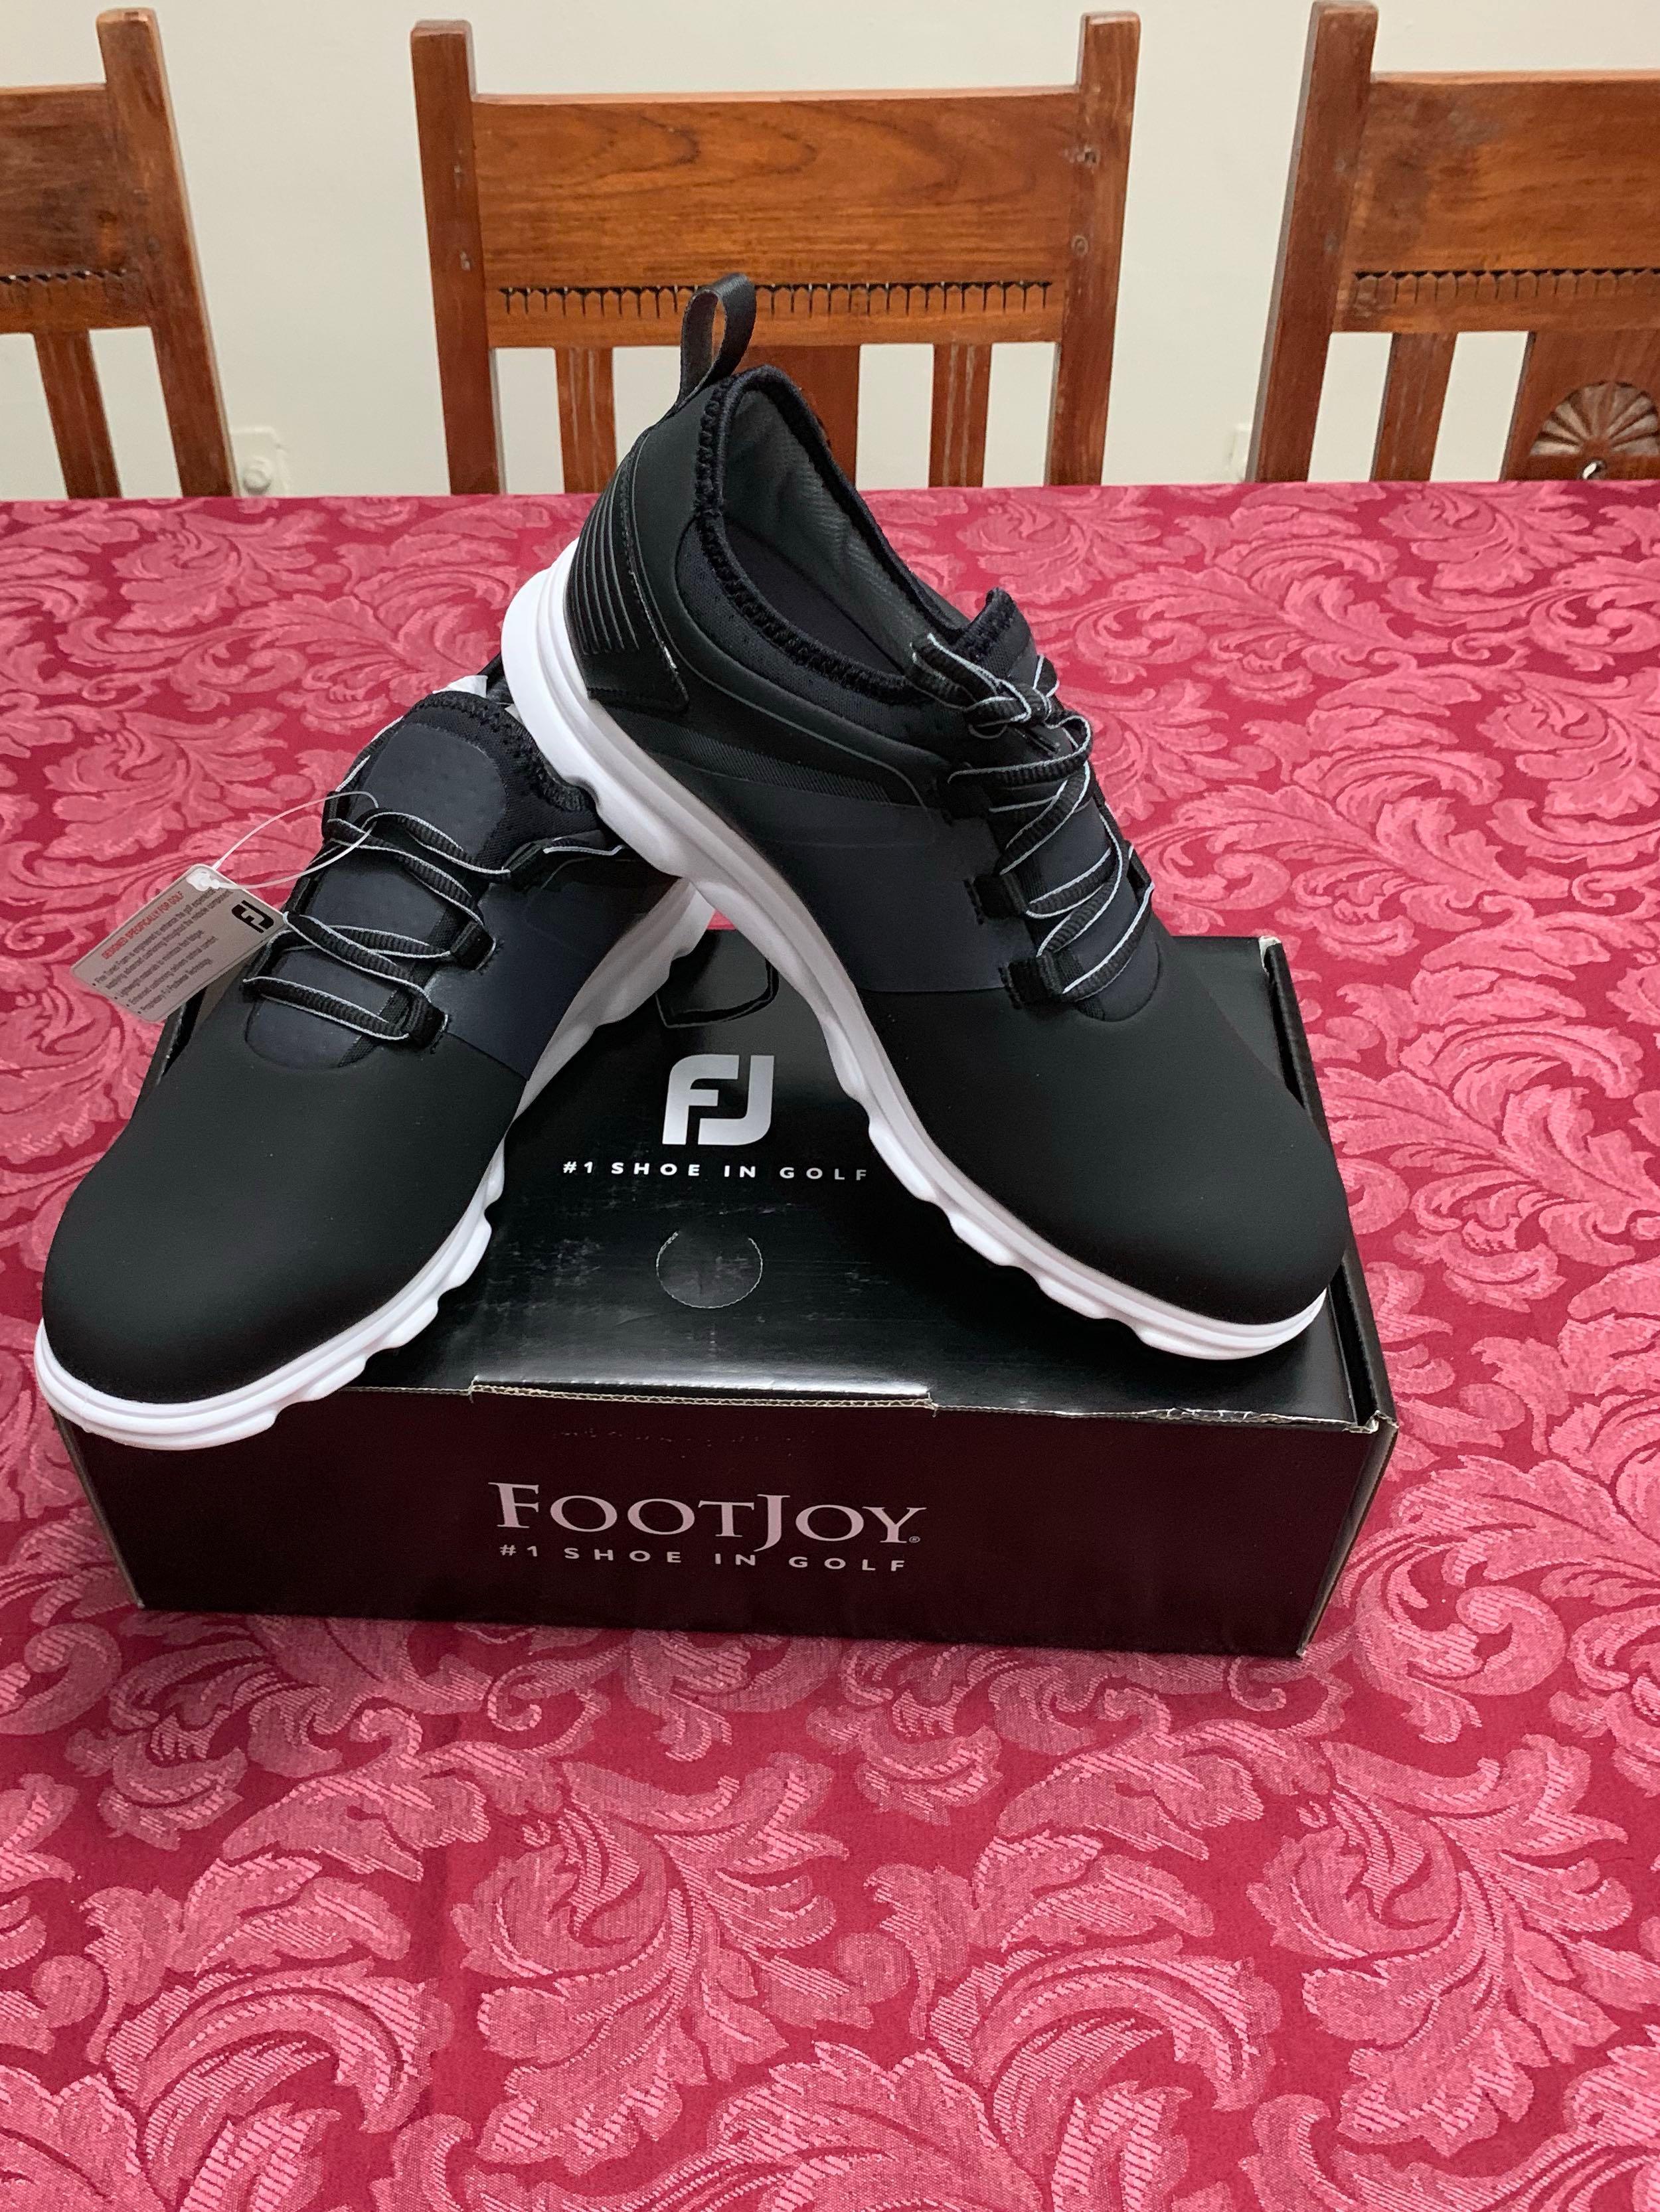 FootJoy 2019 Superlites XP Golf Shoes 